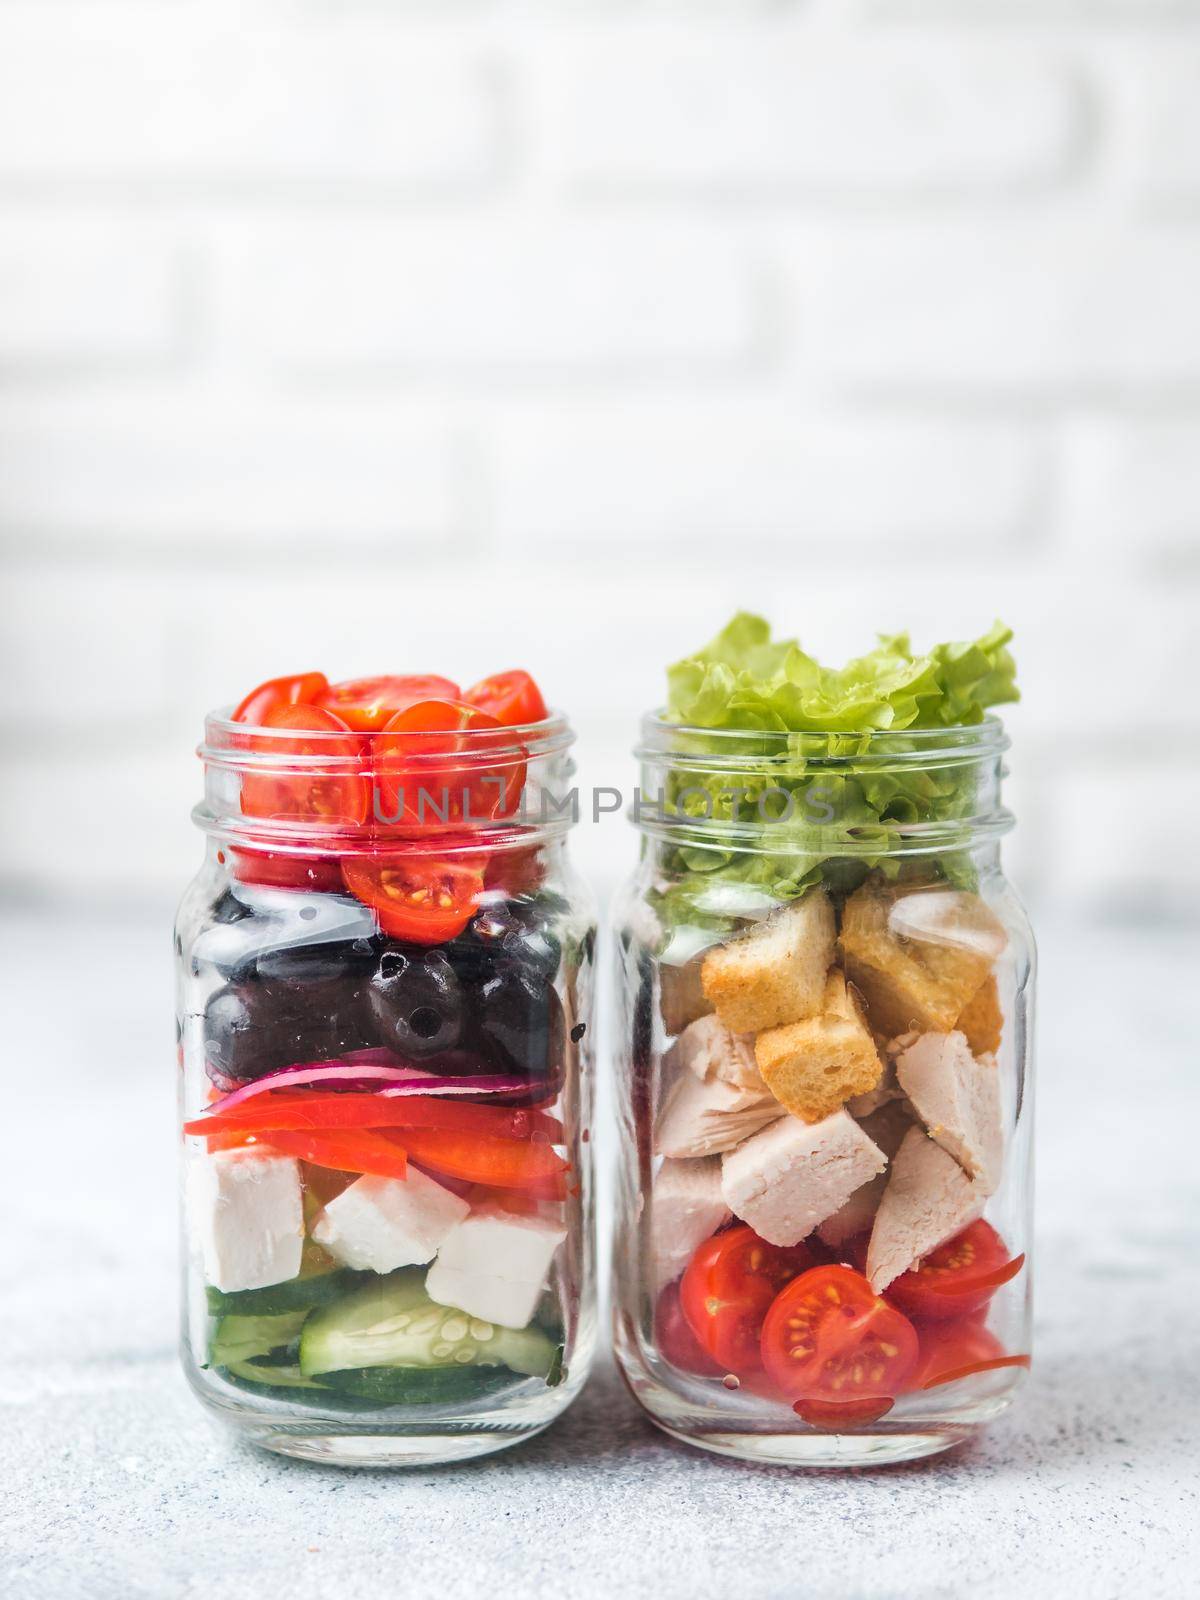 Caesar salad and Greek Salad in glass mason jar by fascinadora